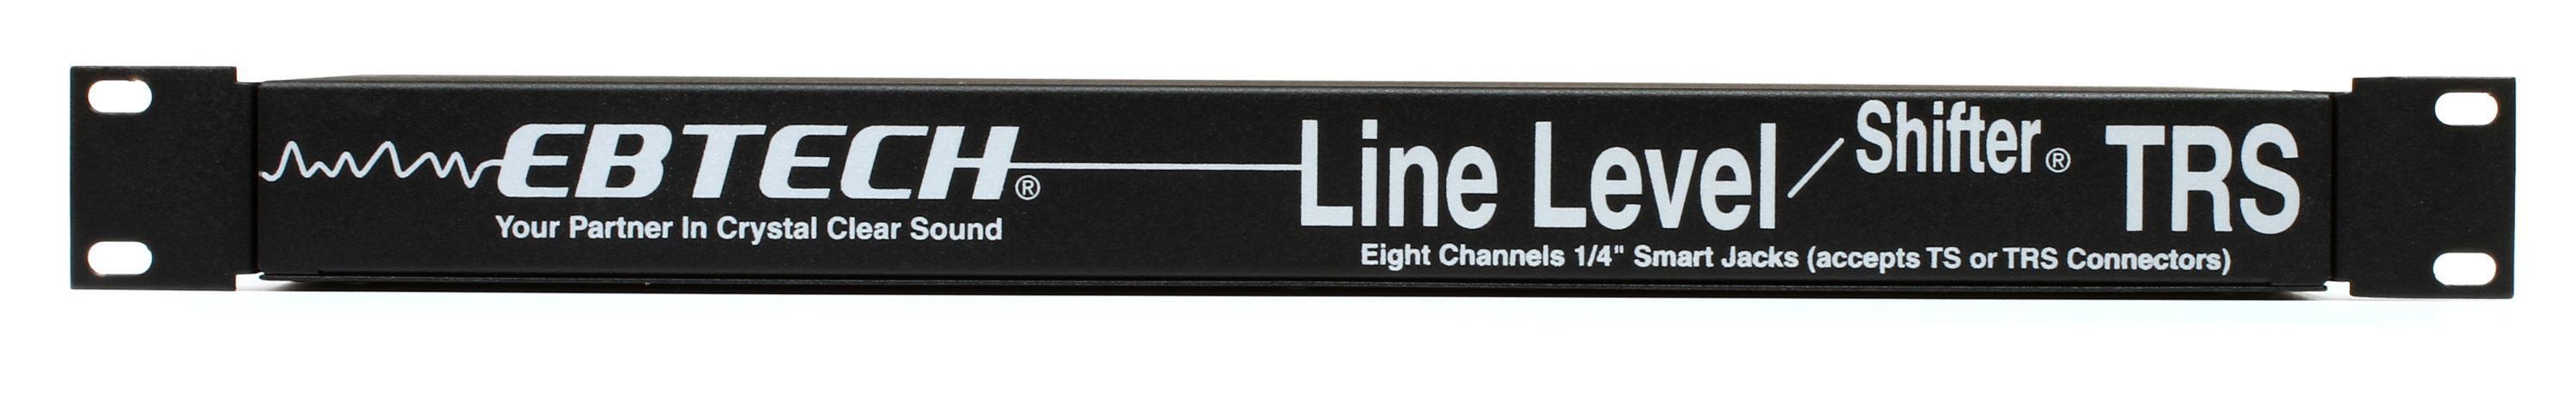 Ebtech LLS-8 8-channel Rack Mount Line Level Shifter